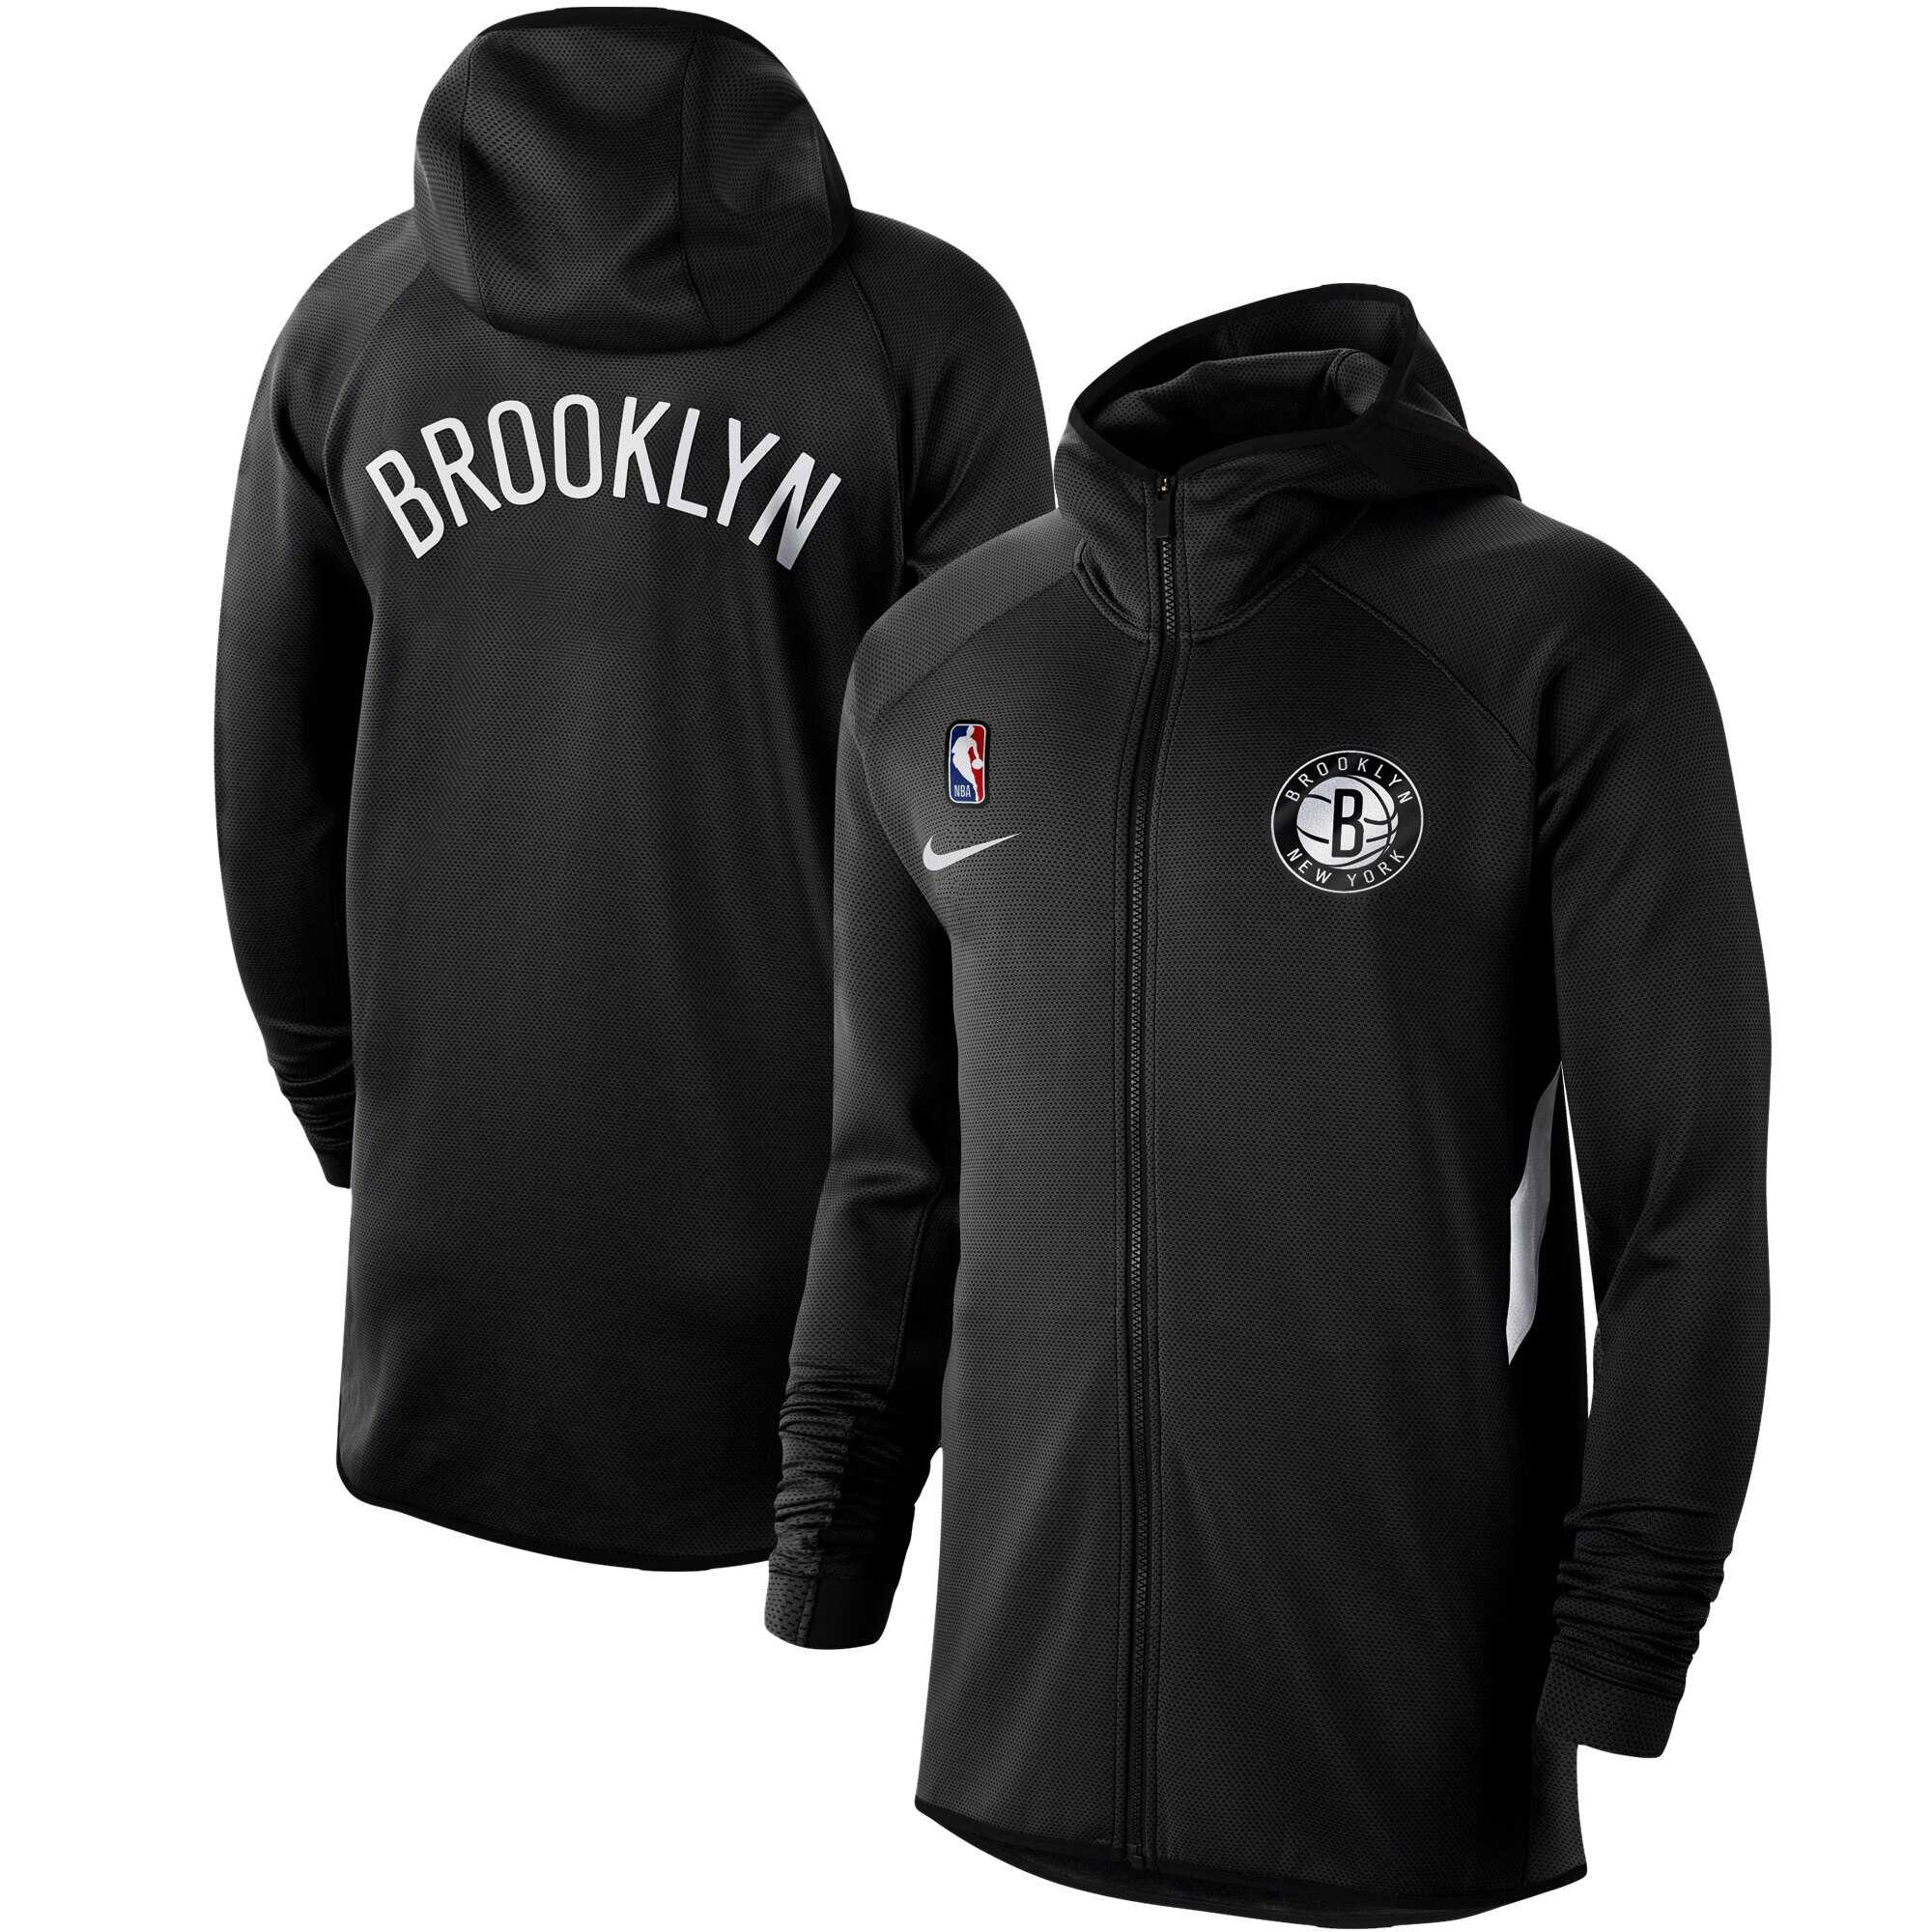 Men lNike Brooklyn Nets Black Authentic Showtime Therma Flex Performance FullZip Hoodie